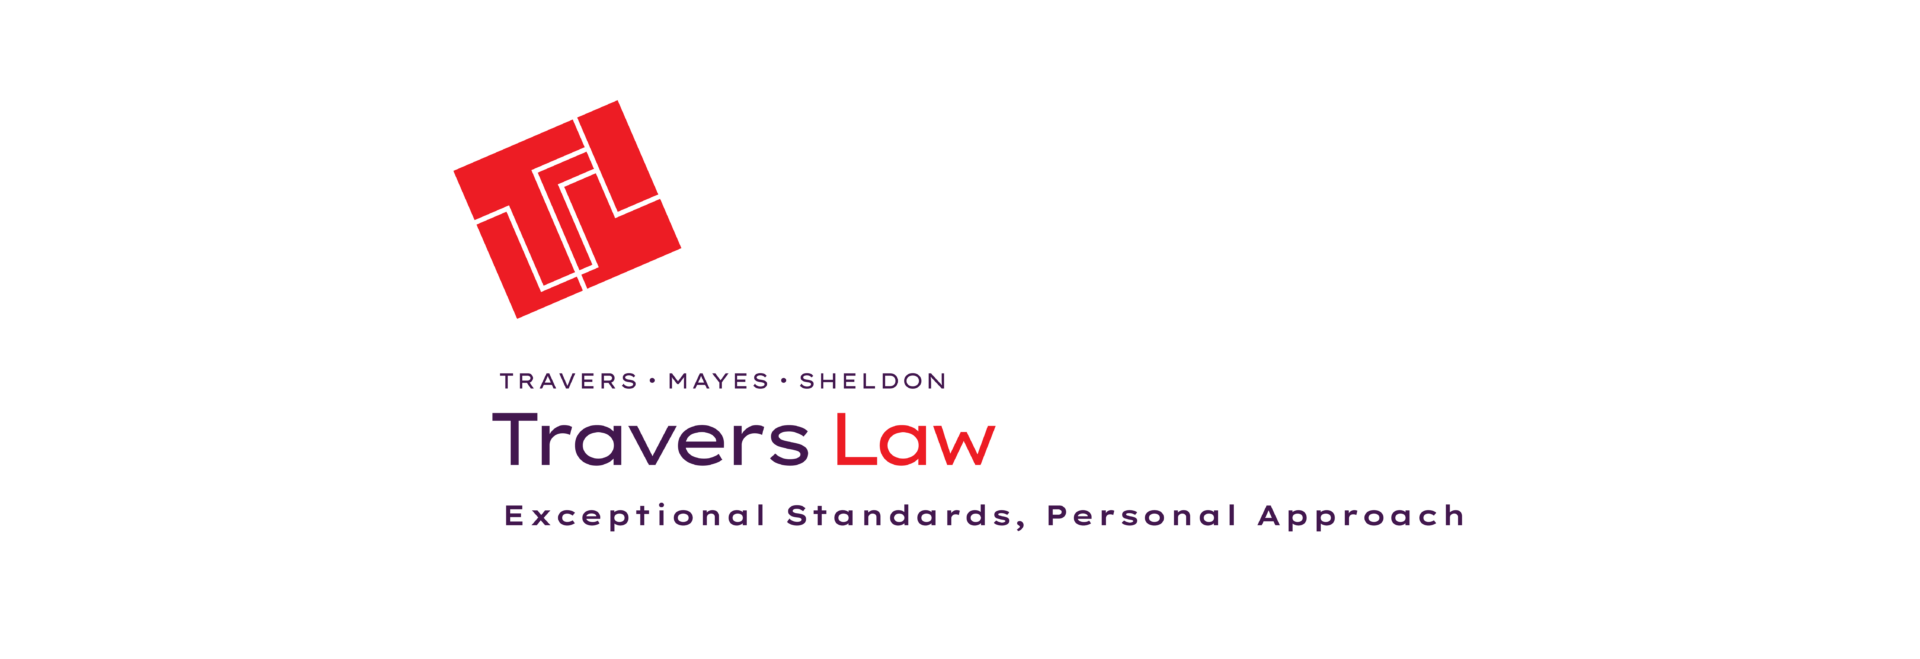 Travers Law logo with tagline